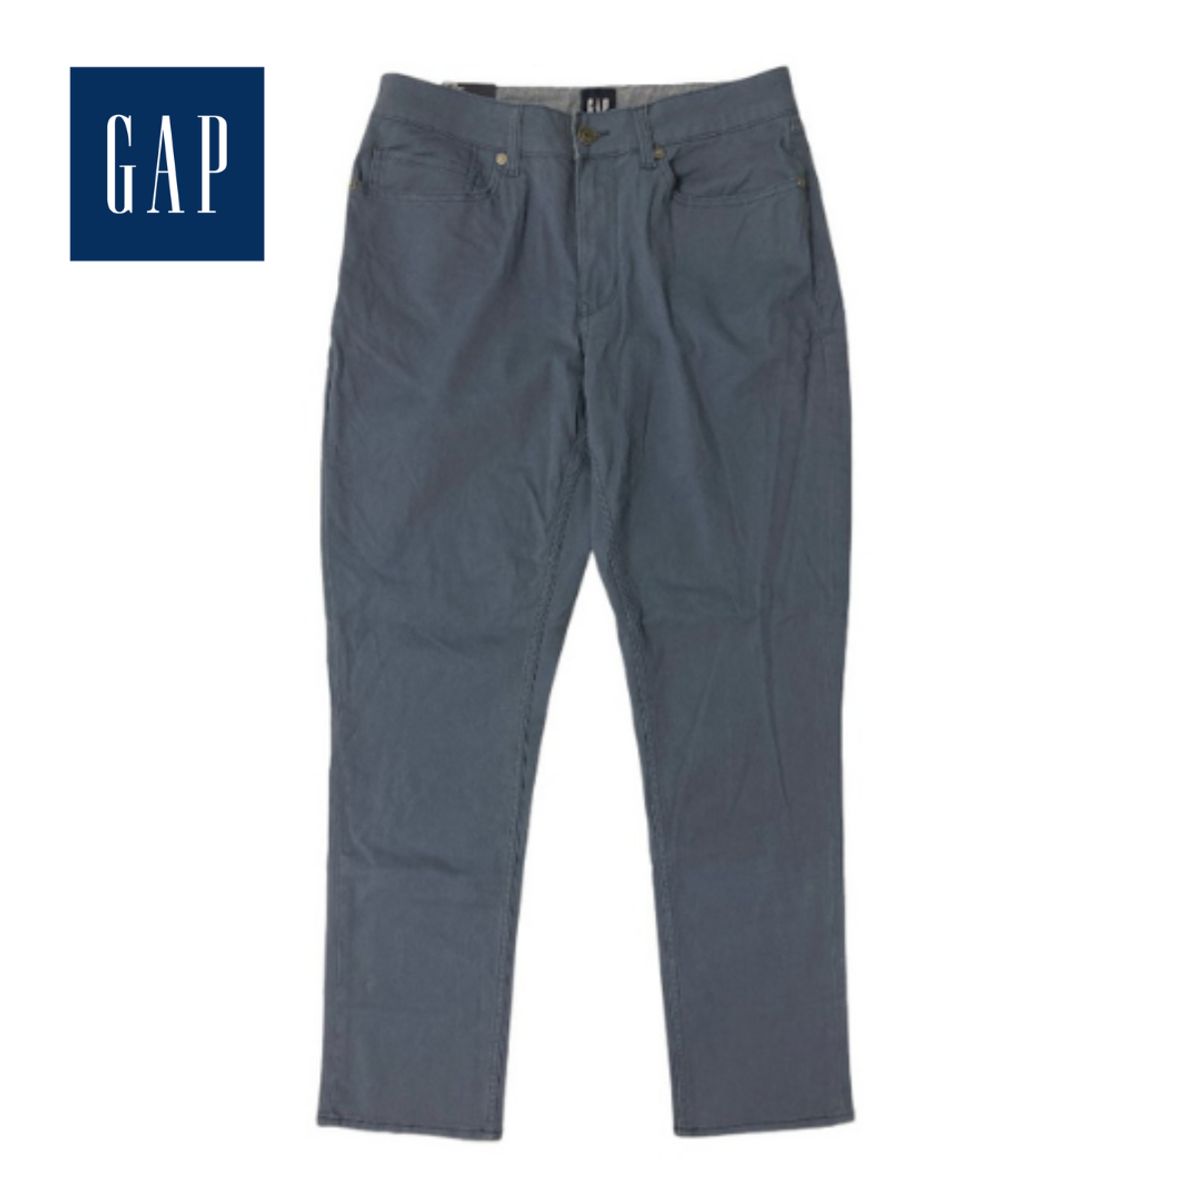 GAP Men's Twill Slim Fit Pant - 34 x 32 - Vintage Indigo